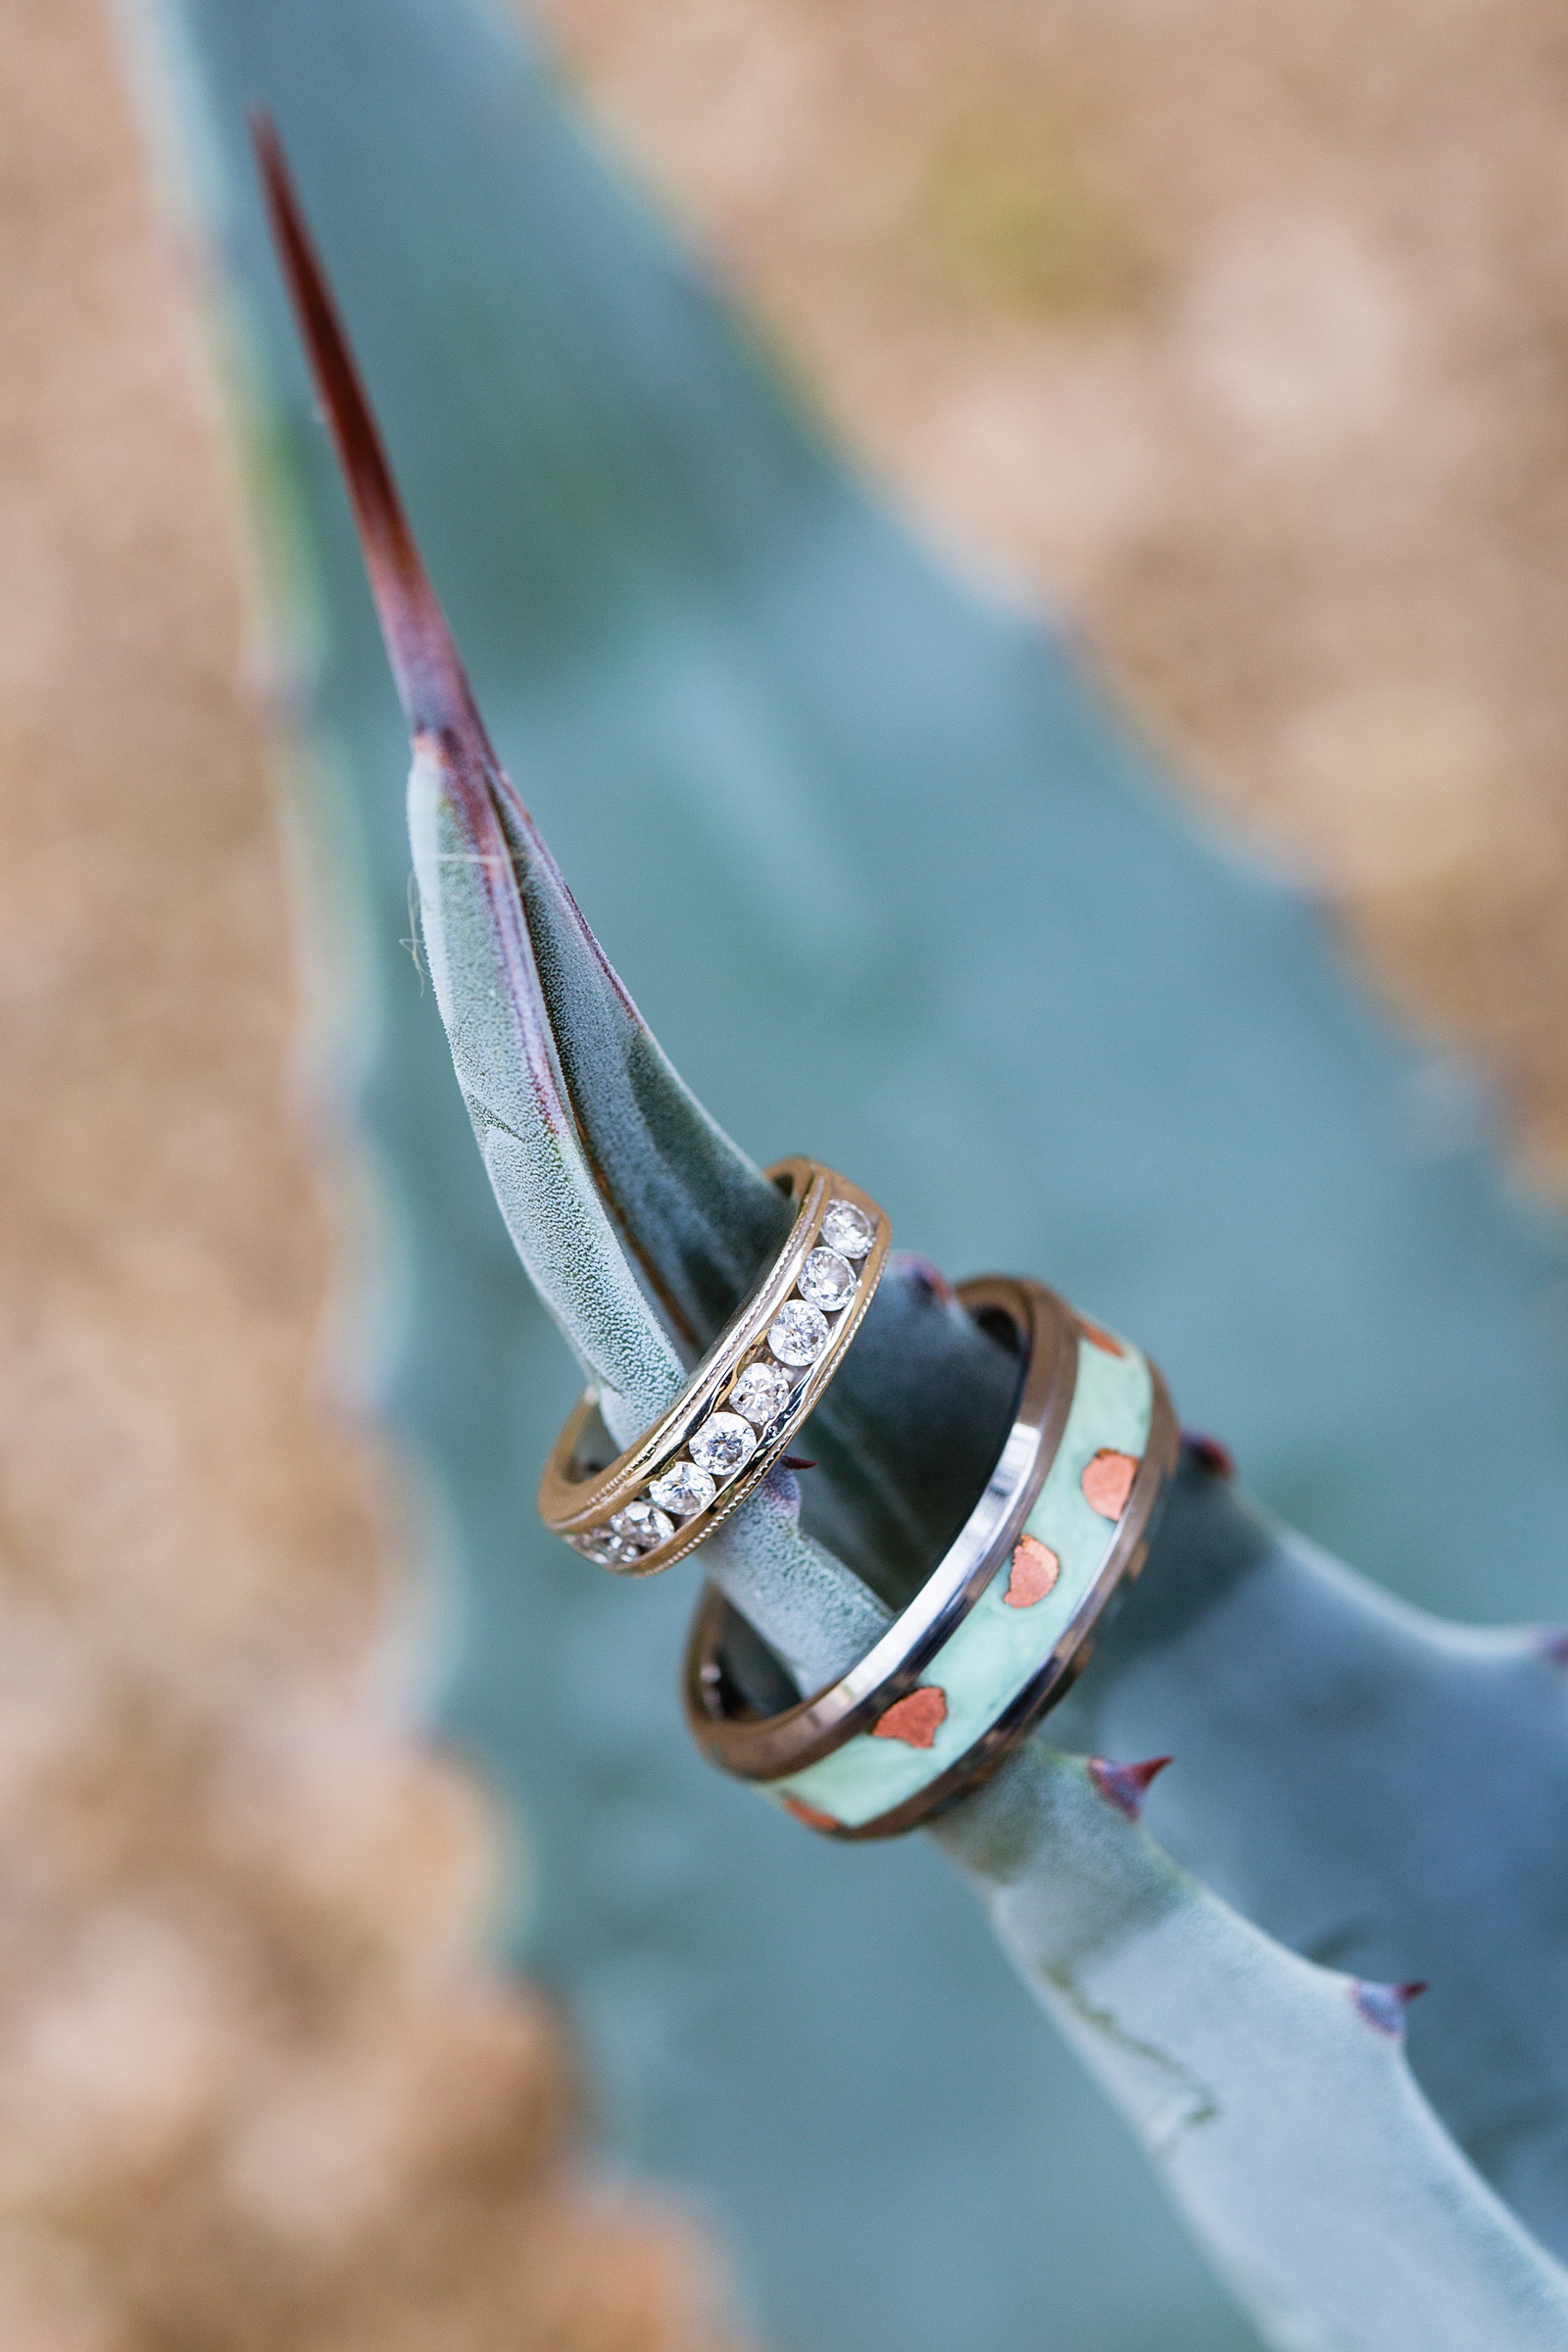 Custom wedding rings on a blue agave leaf by PMA Photography.